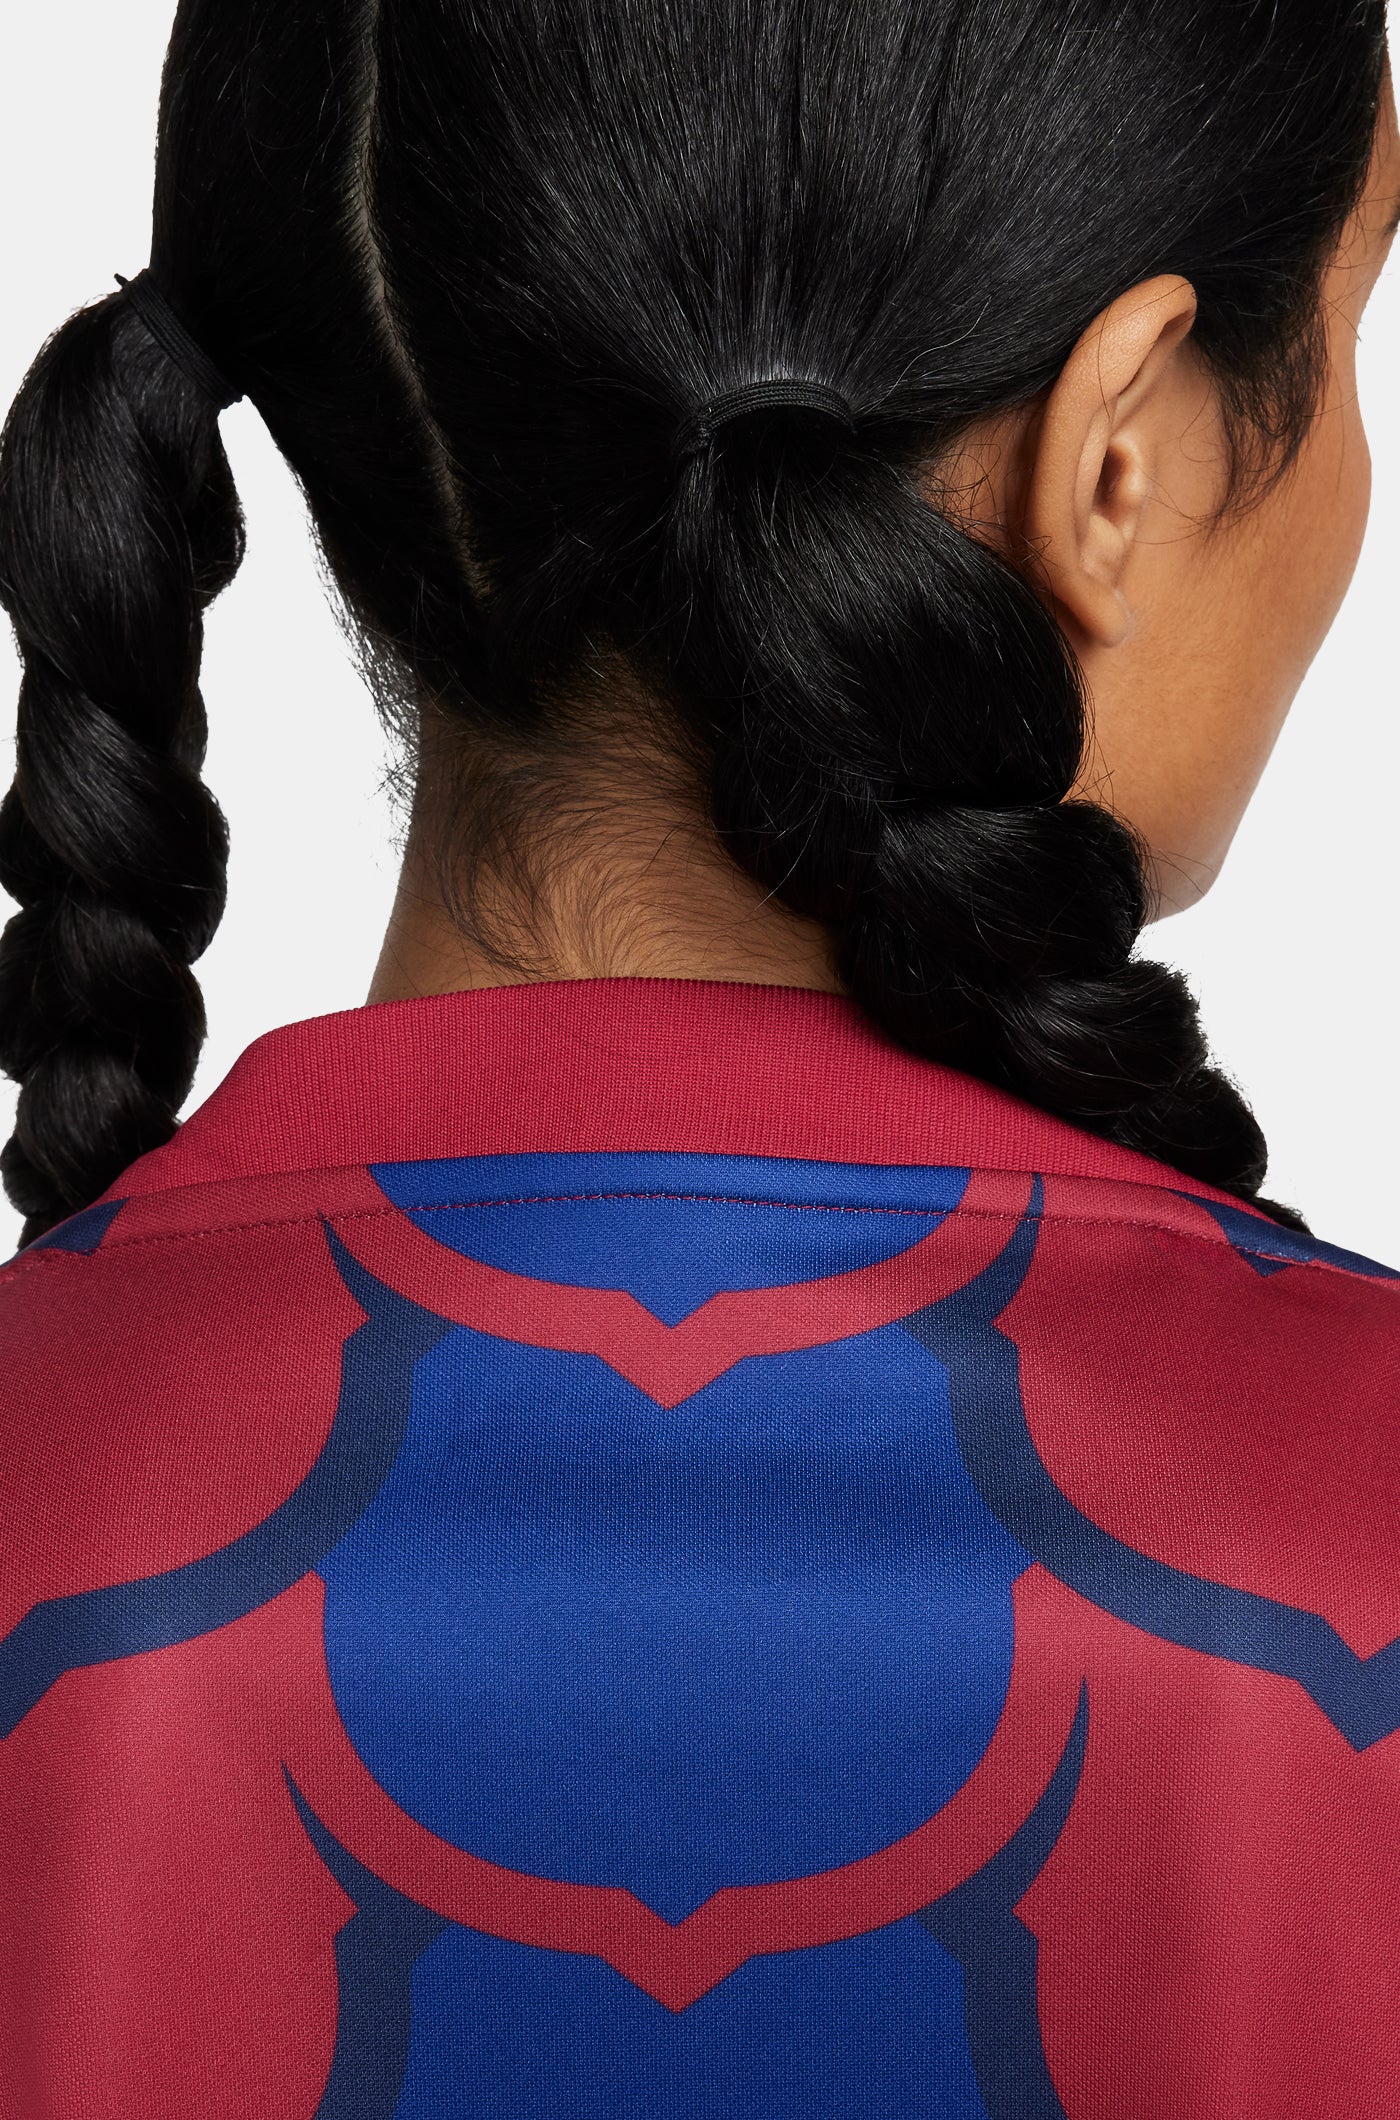 FC Barcelona blaugrana Pre-Match Shirt - Women's